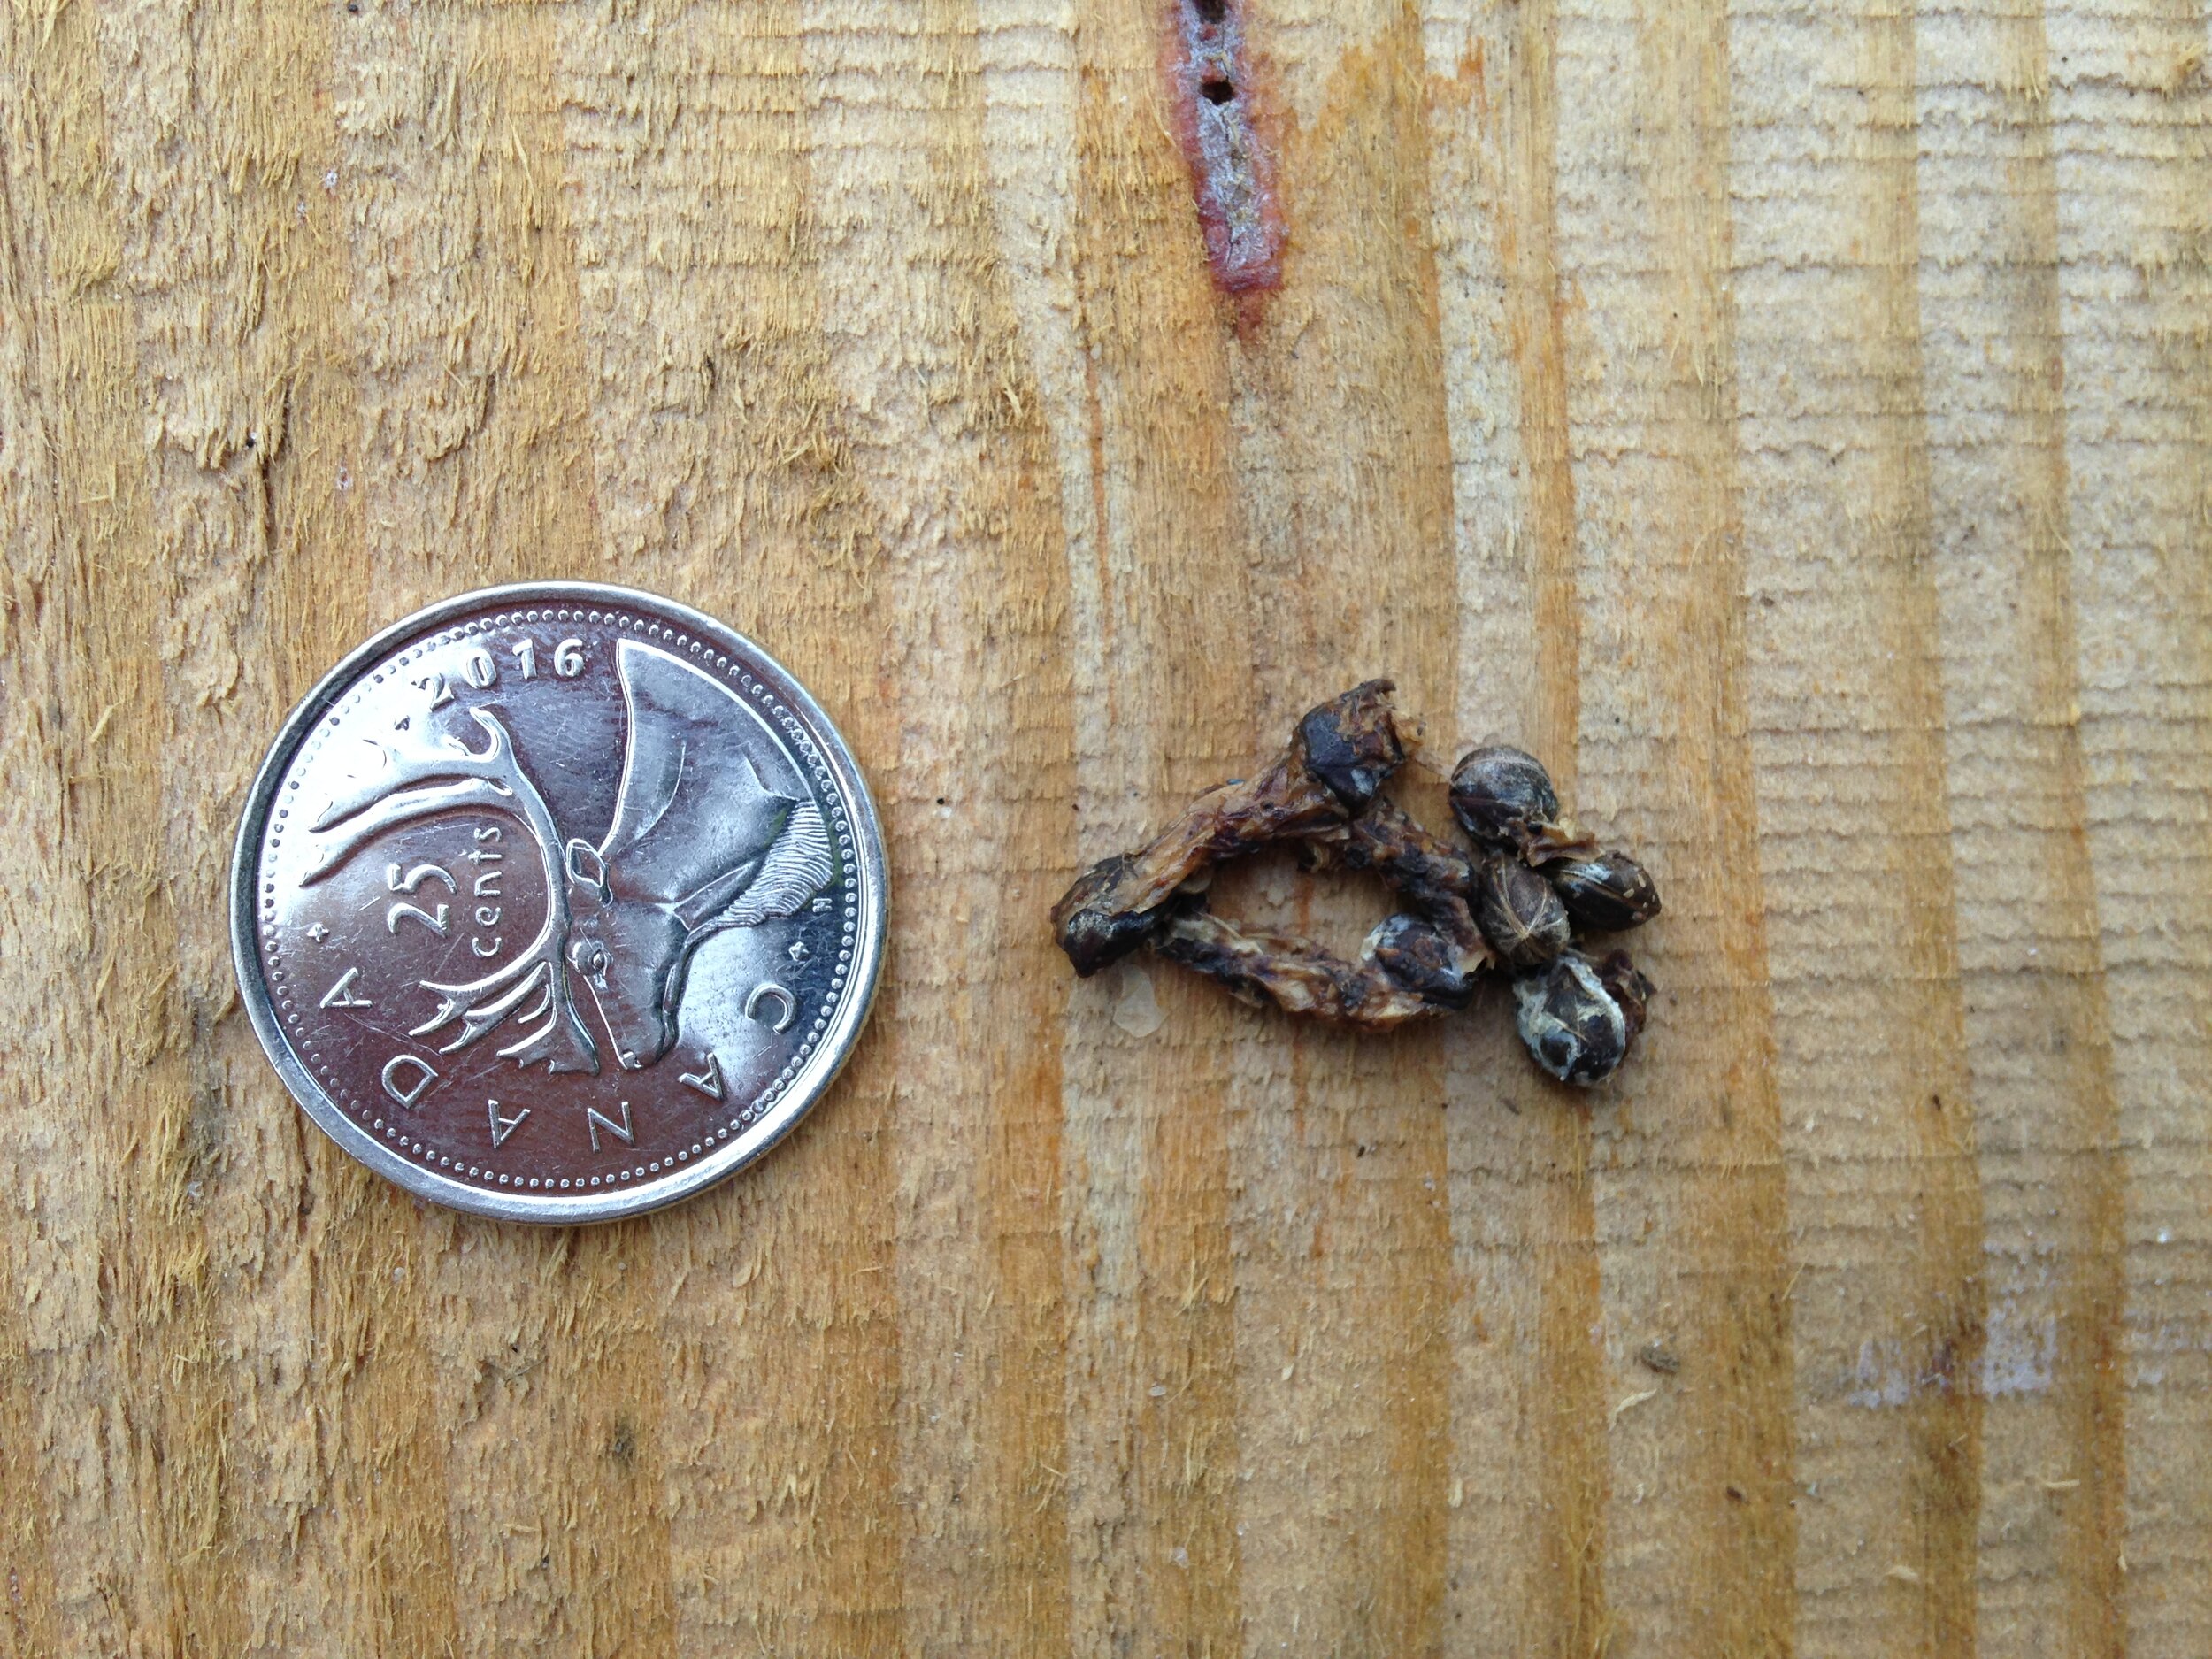 Red Osier Dogwood seed in Chipmunk scat